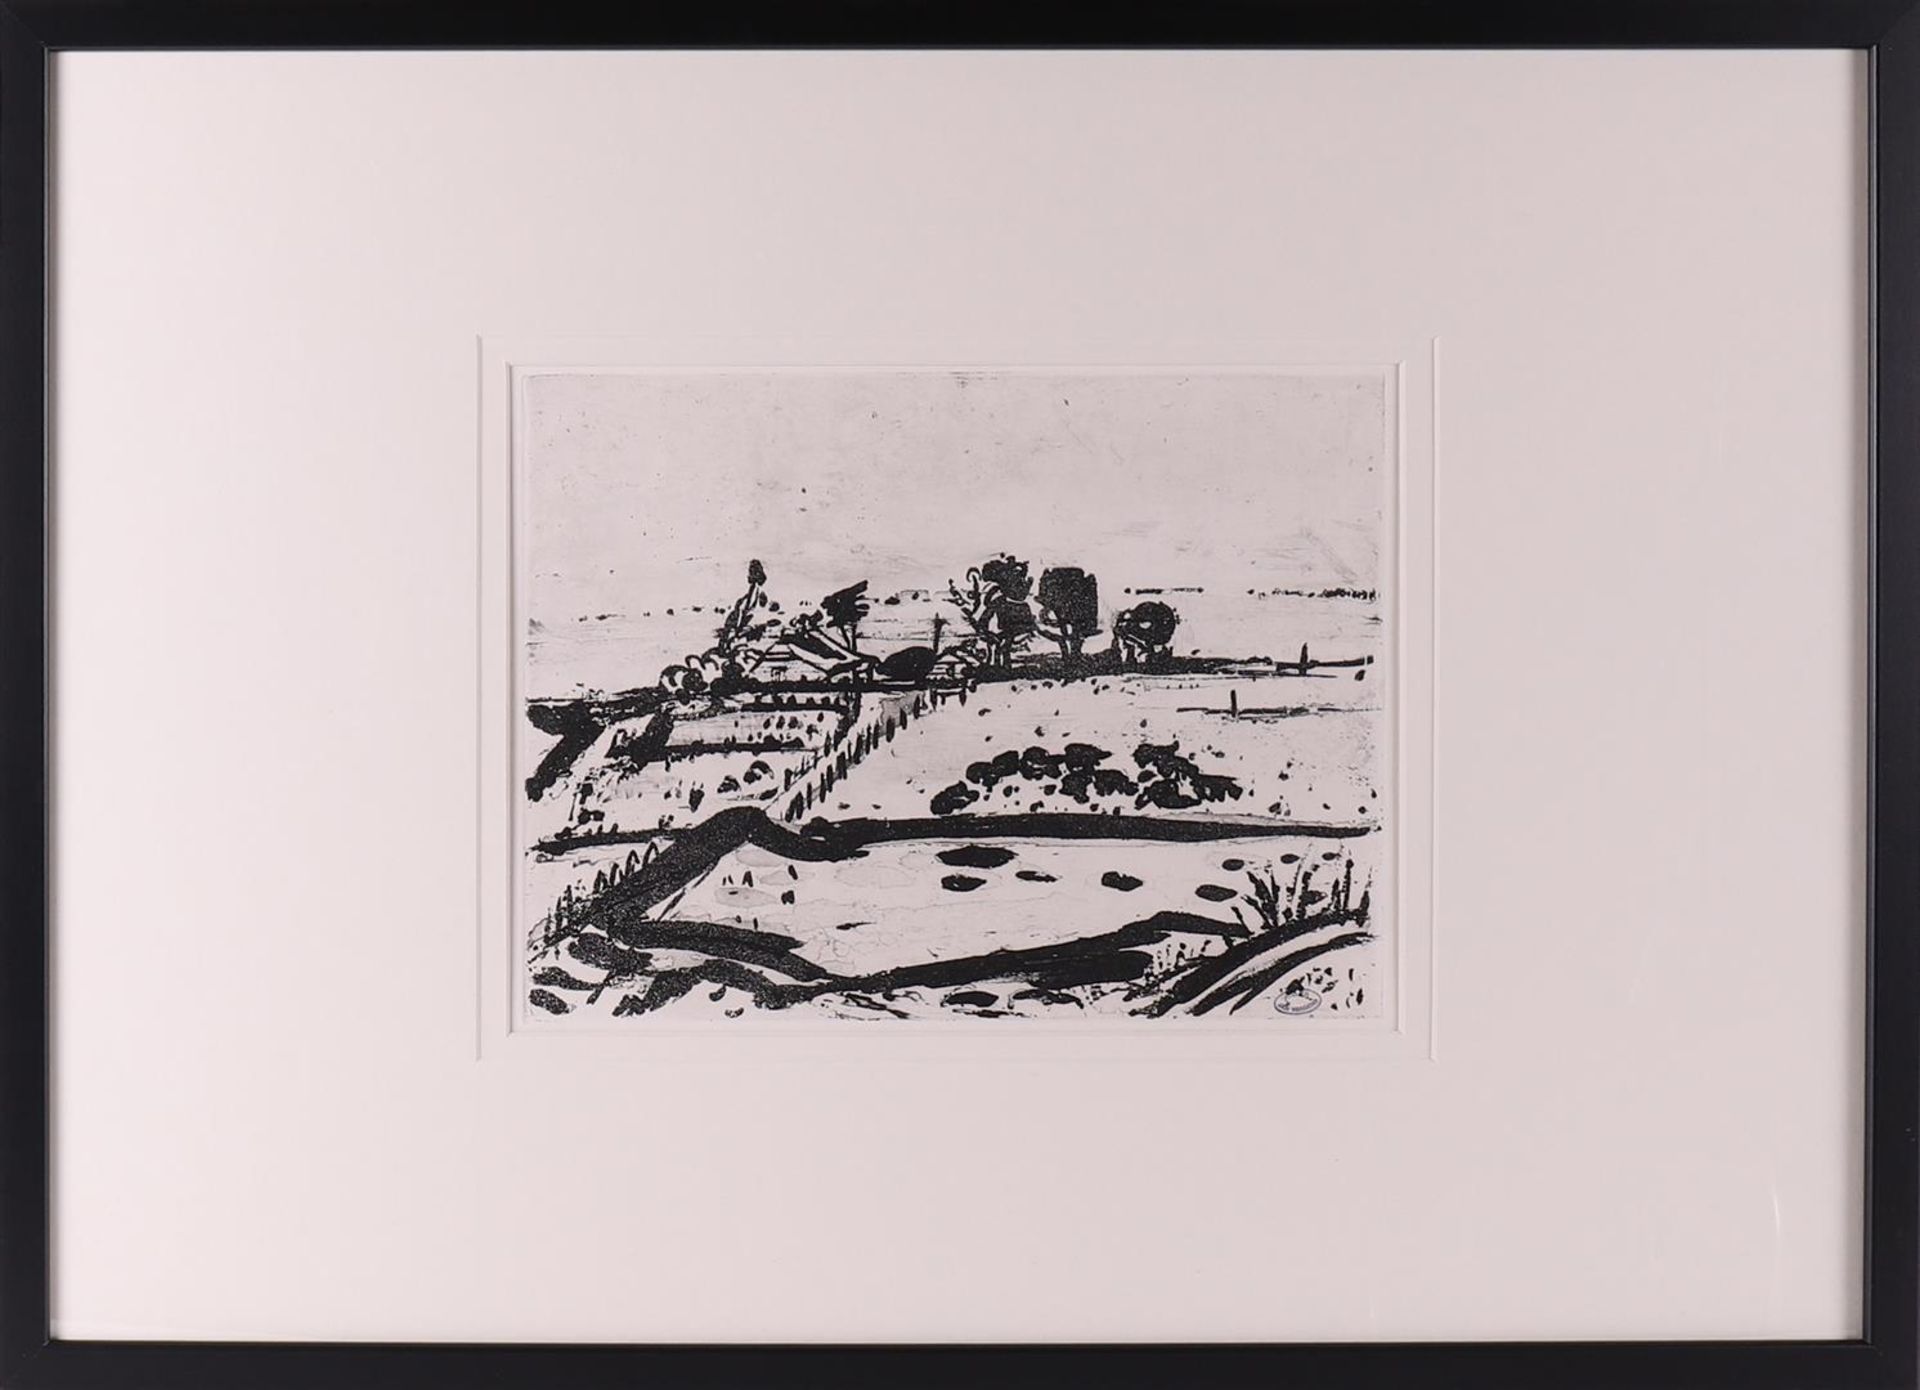 Wiegers, Jan (Oldenhove 1893 - A'dam 1959) "Groninger landscape", signed with studio stamp '